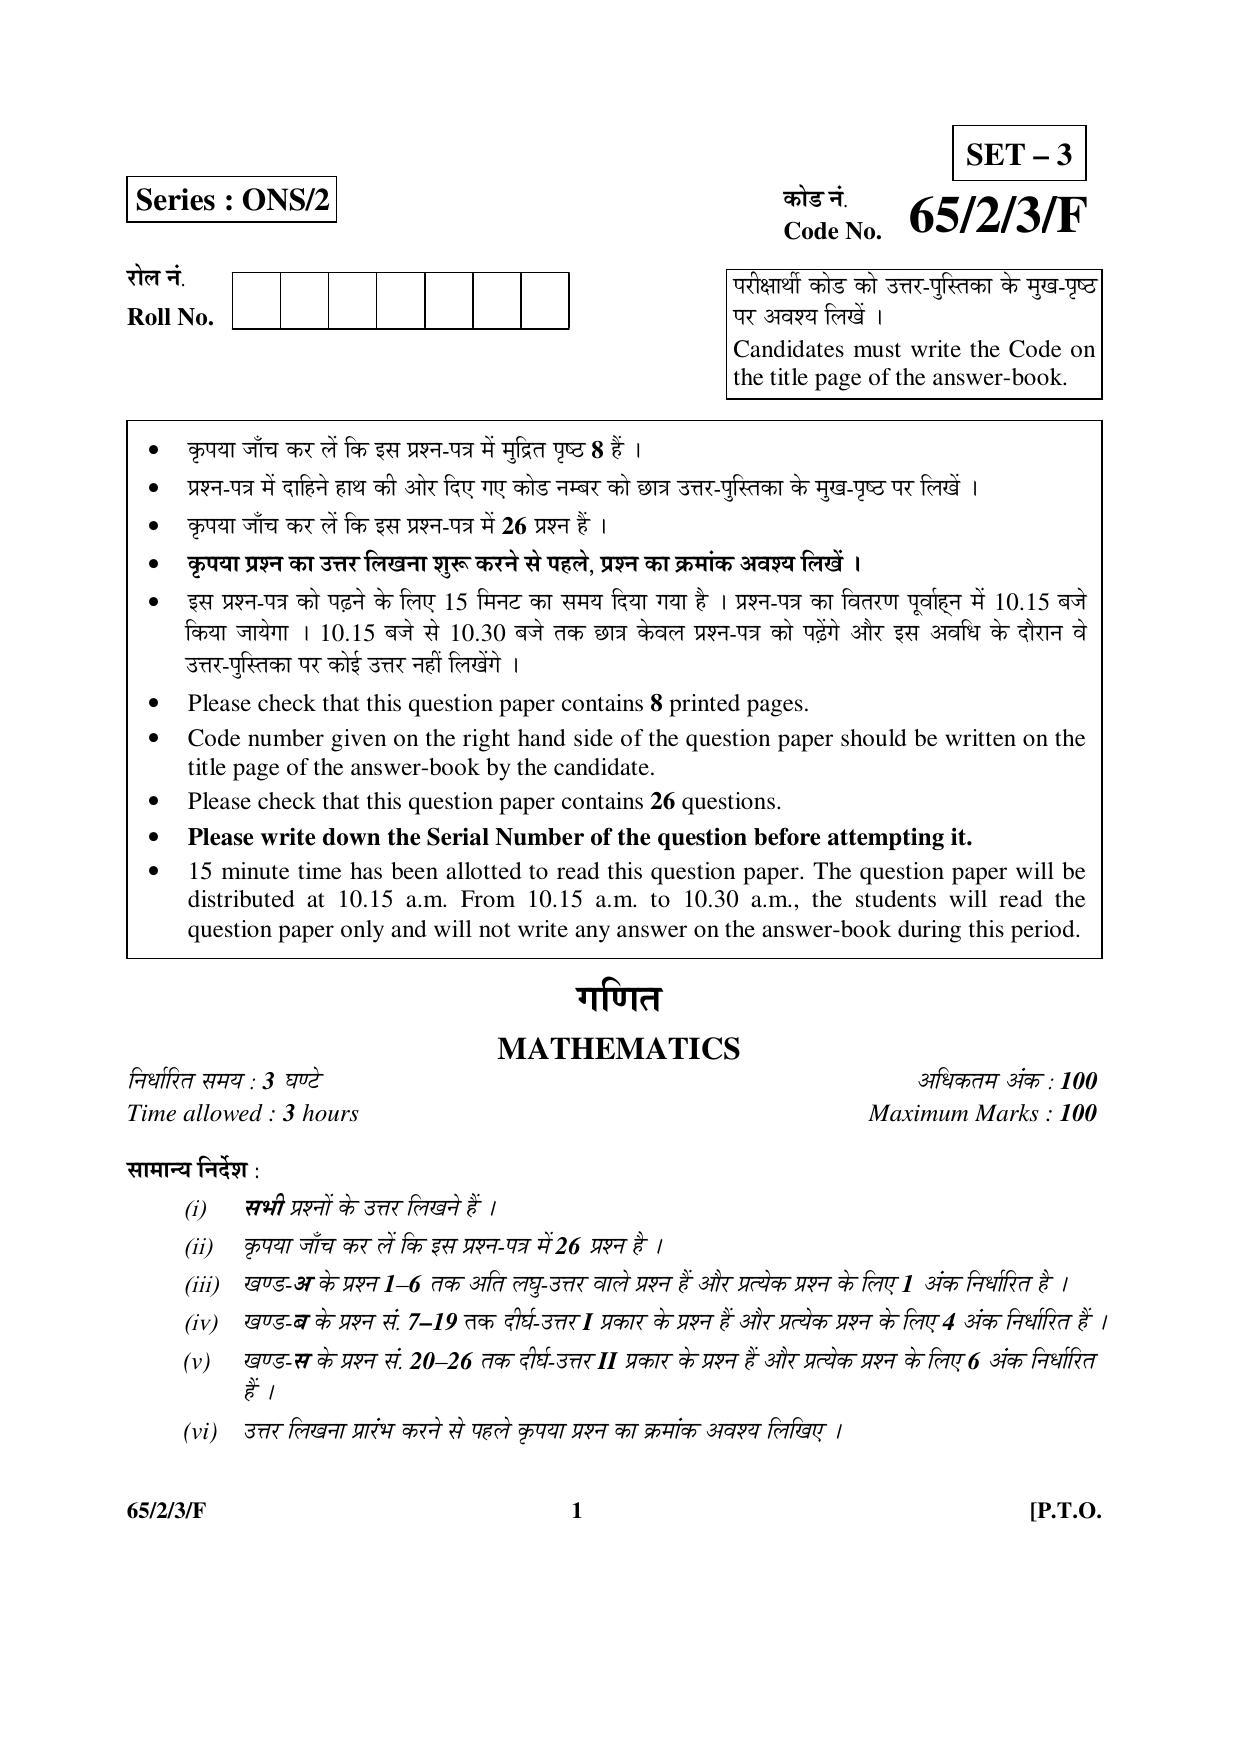 CBSE Class 12 65-2-3-F _Mathematics_ 2016 Question Paper - Page 1